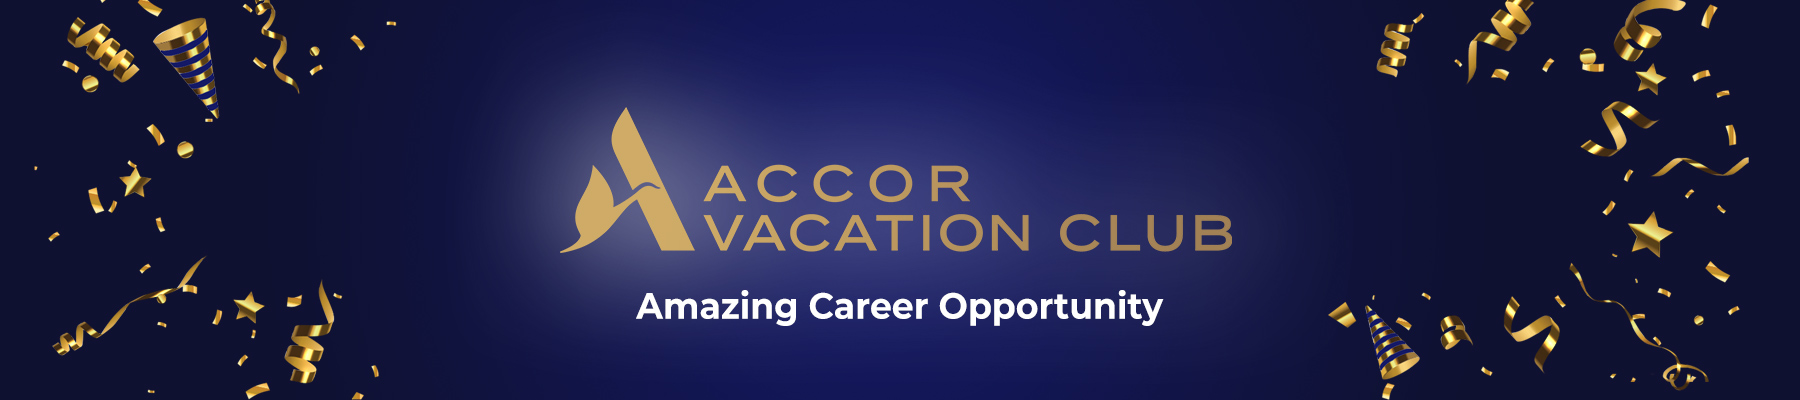 Accor Vacation Club 